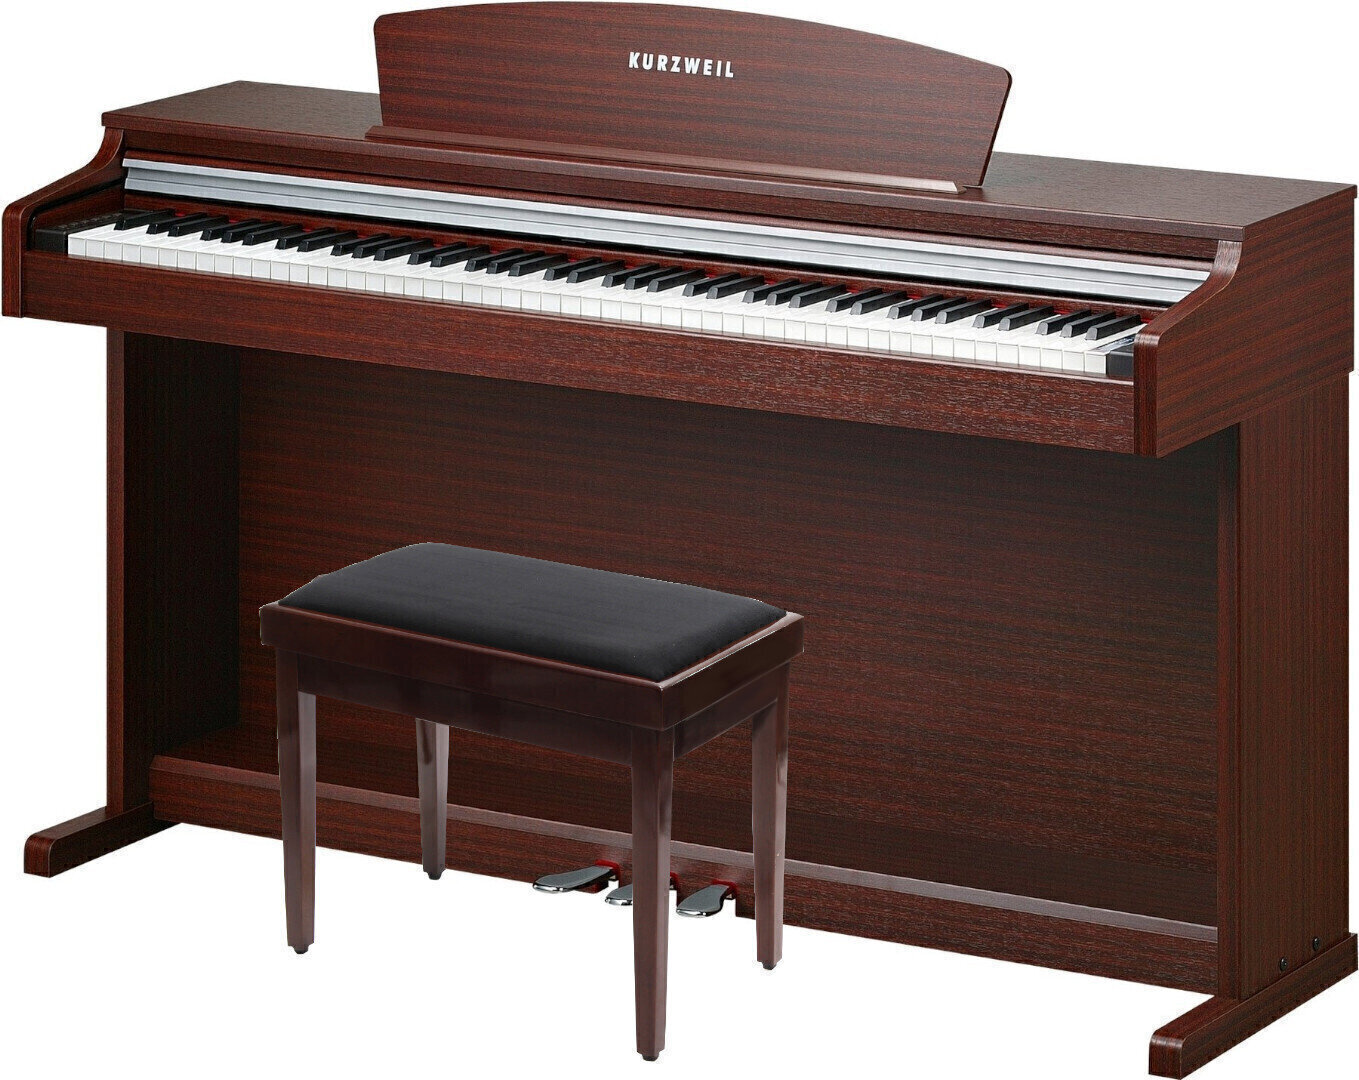 Piano numérique Kurzweil M110A Simulated Mahogany Piano numérique